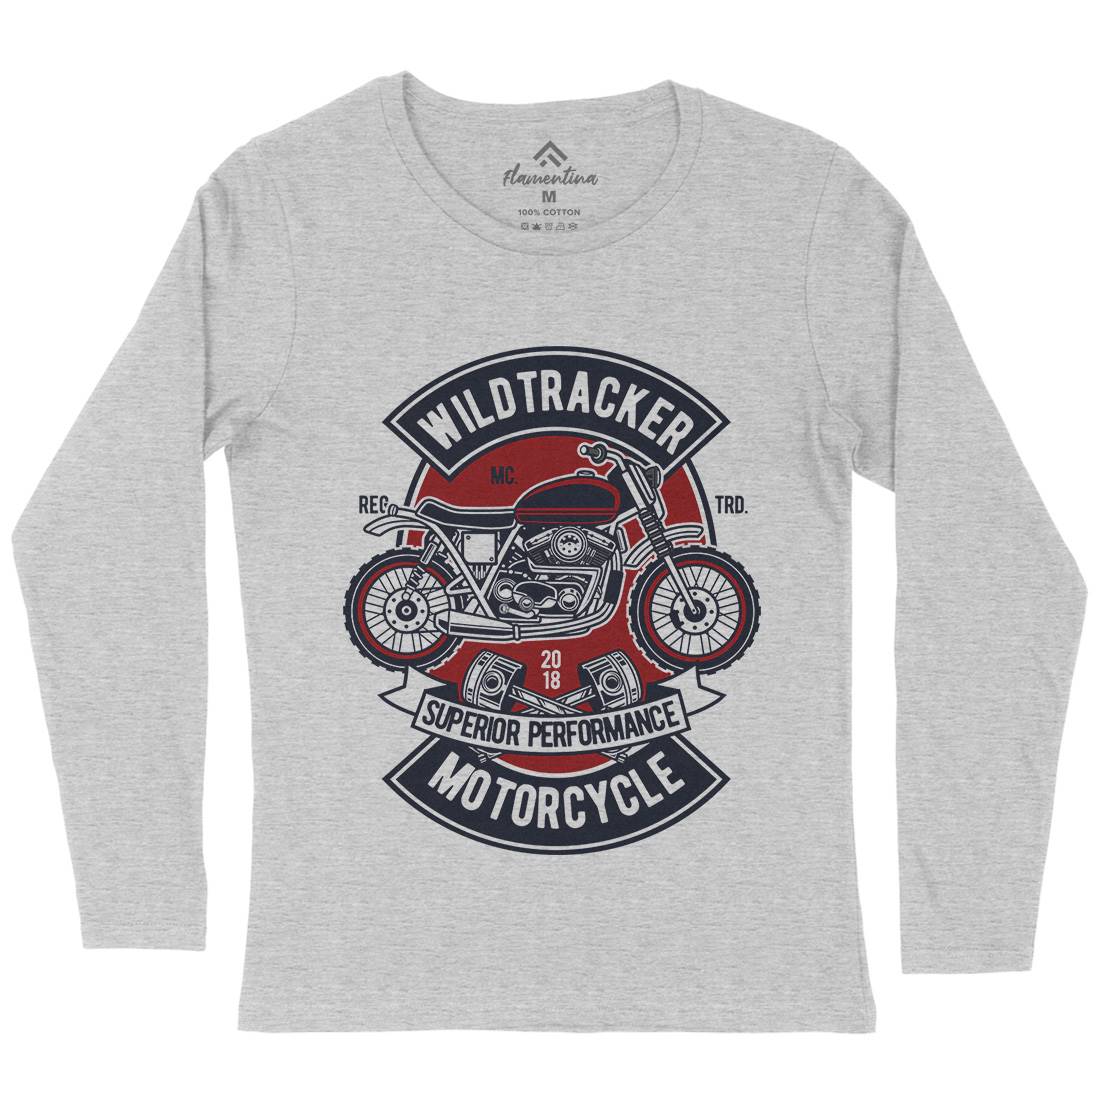 Wild Tracker Womens Long Sleeve T-Shirt Motorcycles D598